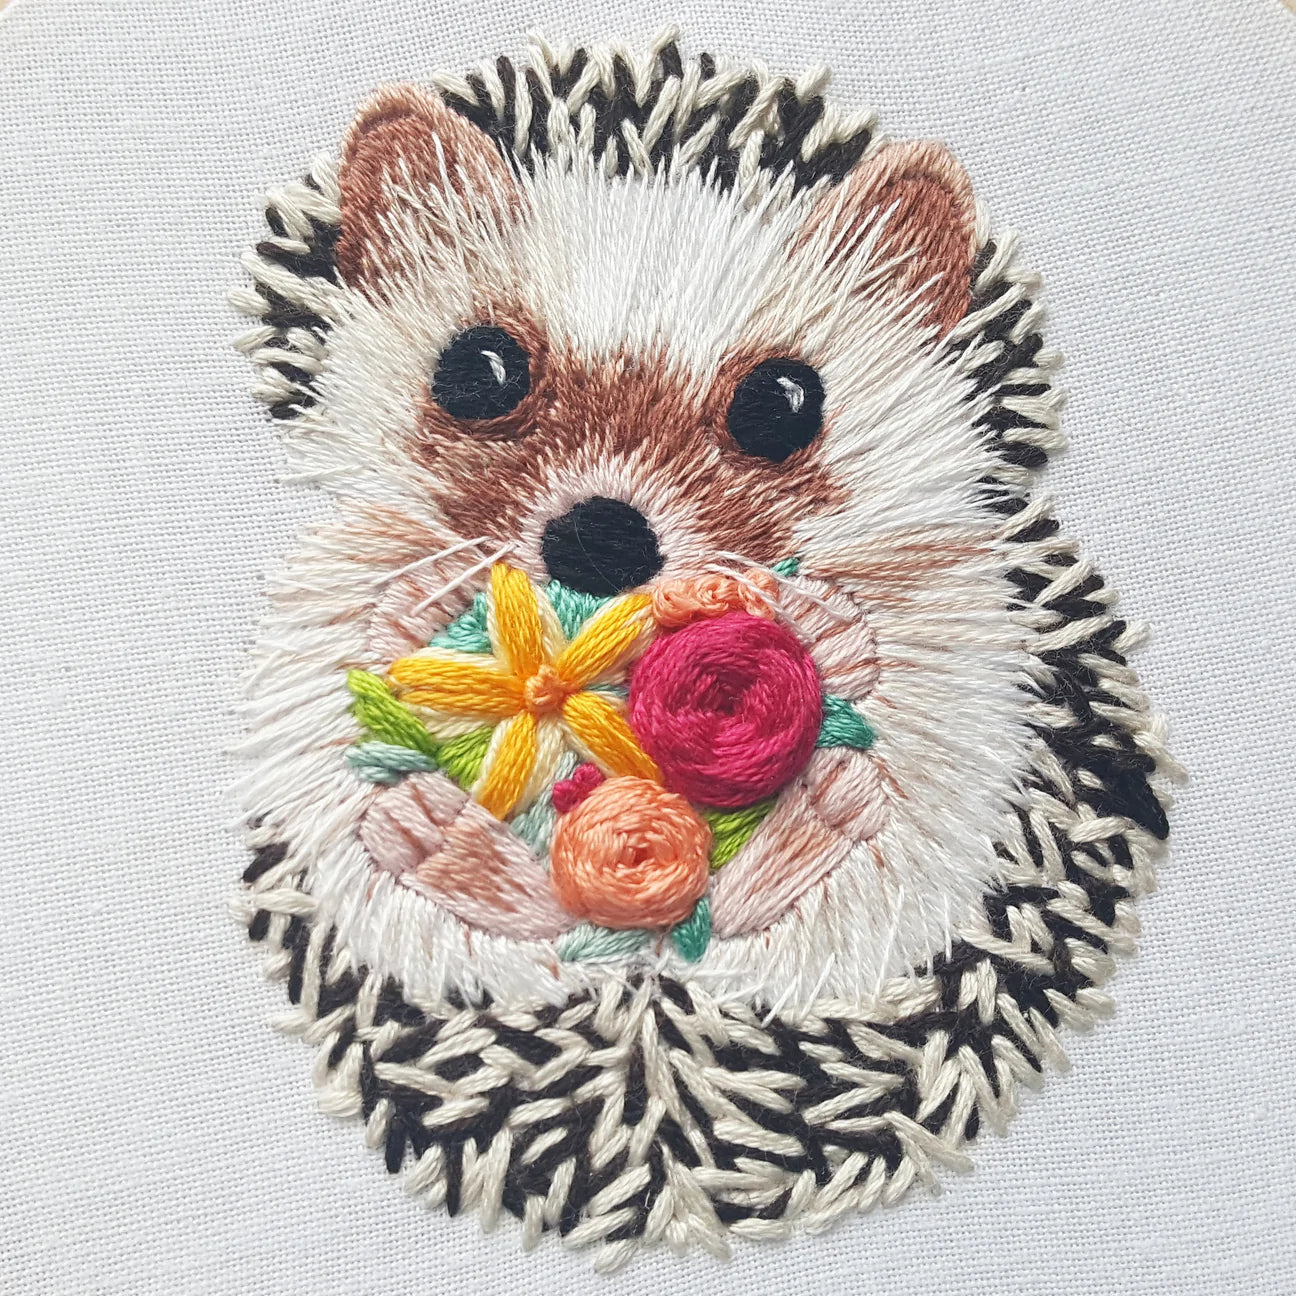 Embroidery Kits